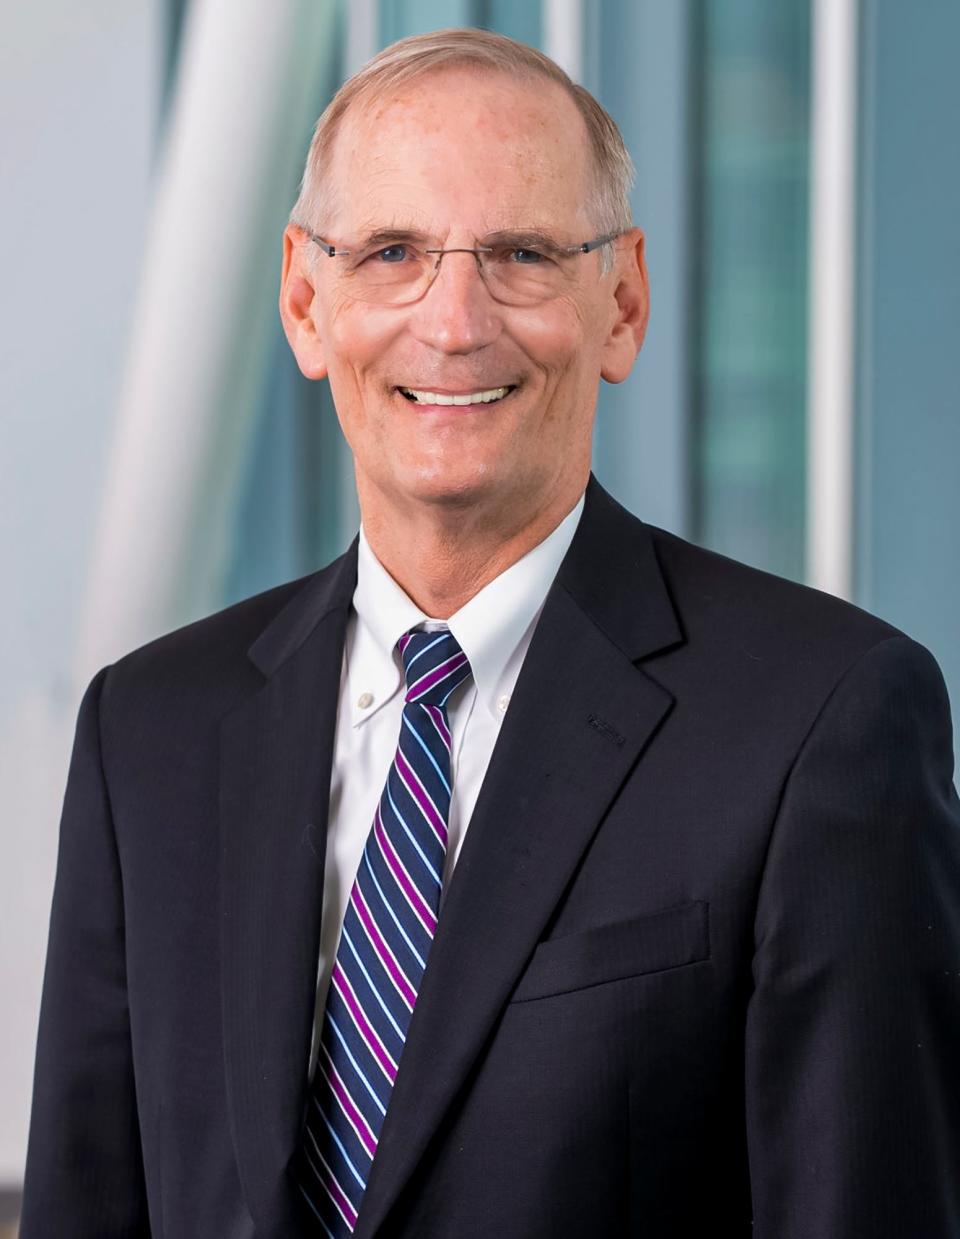 Dr. Richard Lofgren, the president and CEO of OU Health